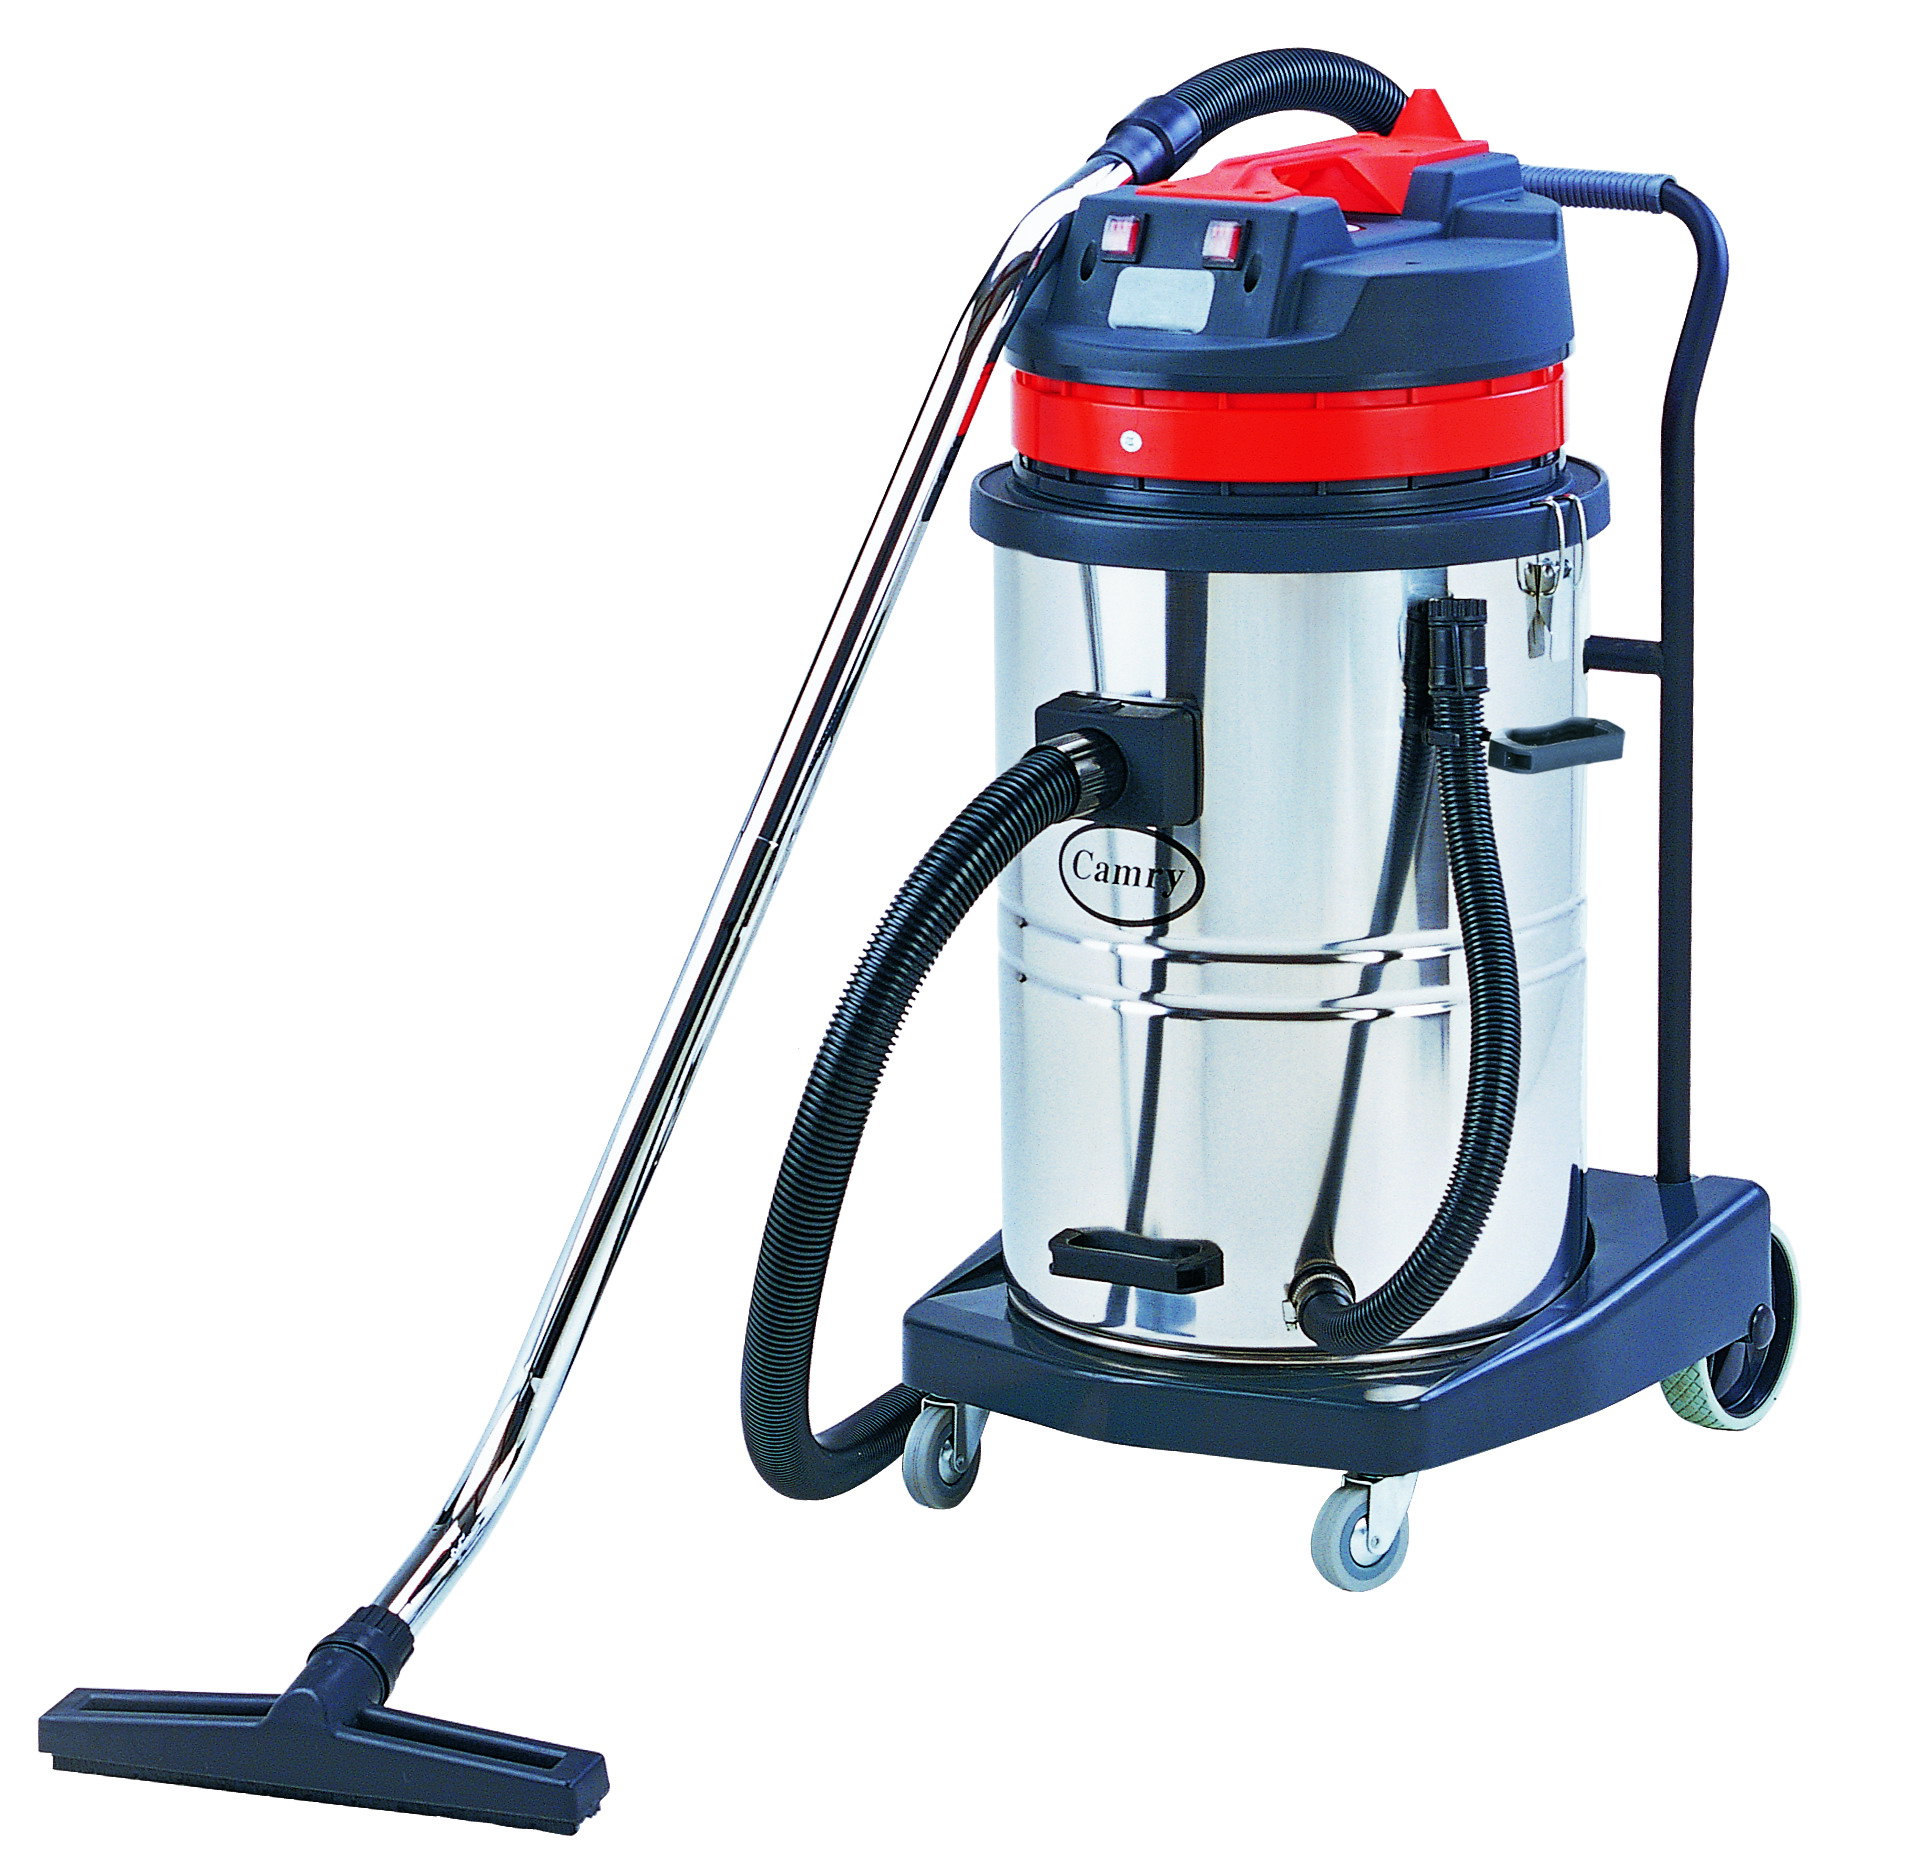 2-motor wet/dry vacuum cleaner